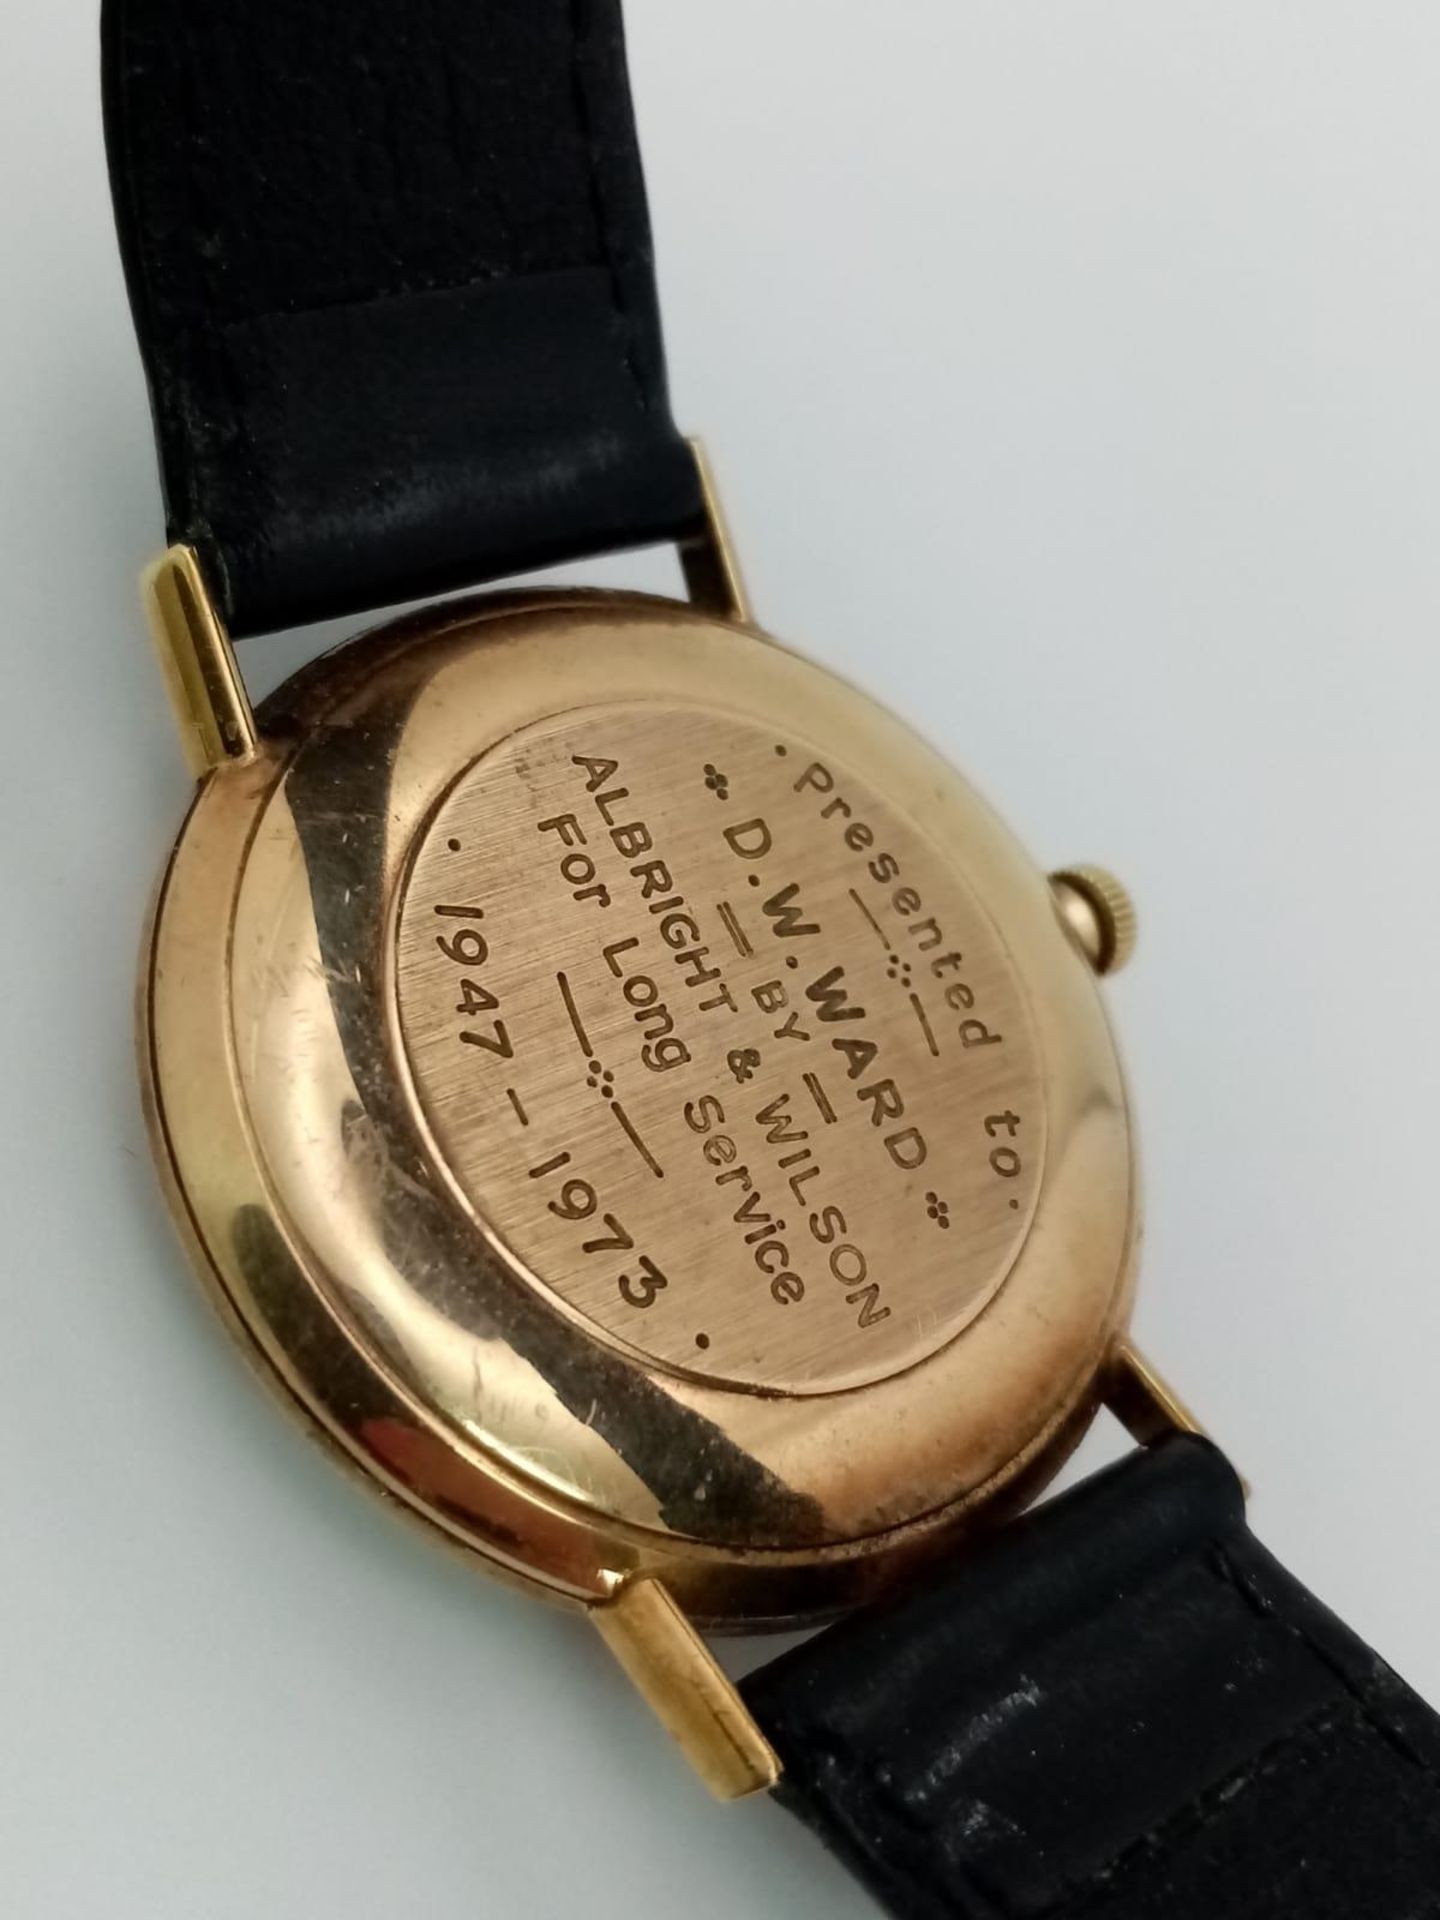 A Beautiful Vintage 9K Gold Omega Geneve Gents Watch. Black leather strap. 9K gold case - 34mm. - Image 4 of 6